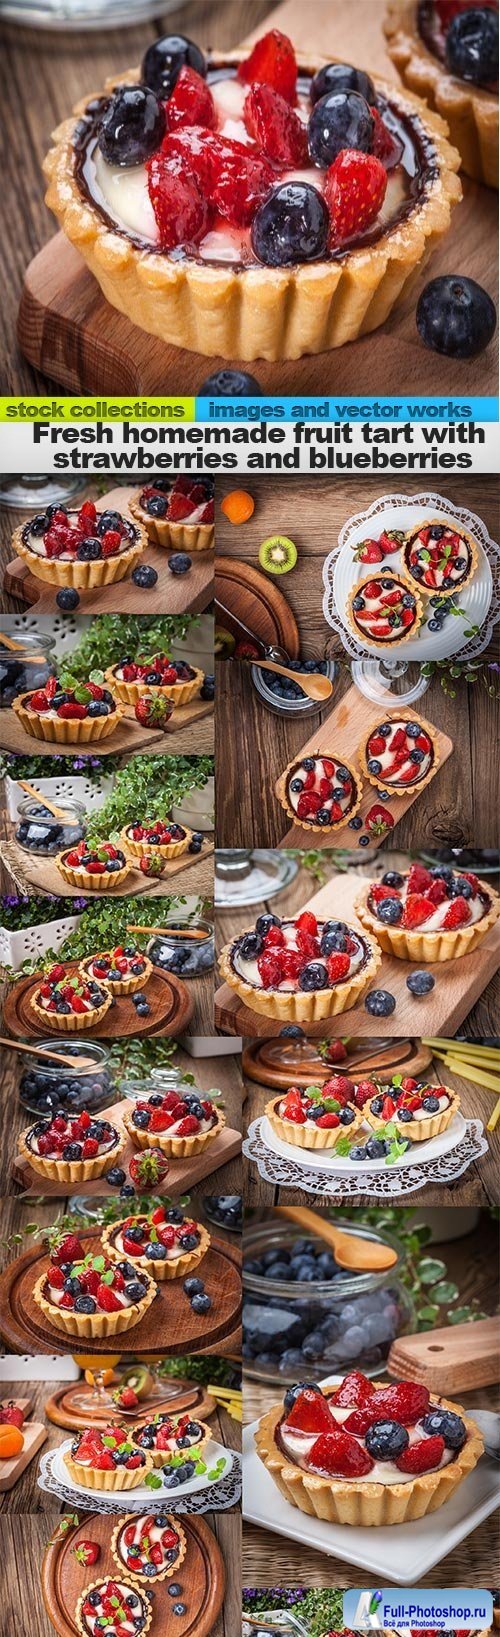 Fresh homemade fruit tart with strawberries and blueberries, 15 x UHQ JPEG